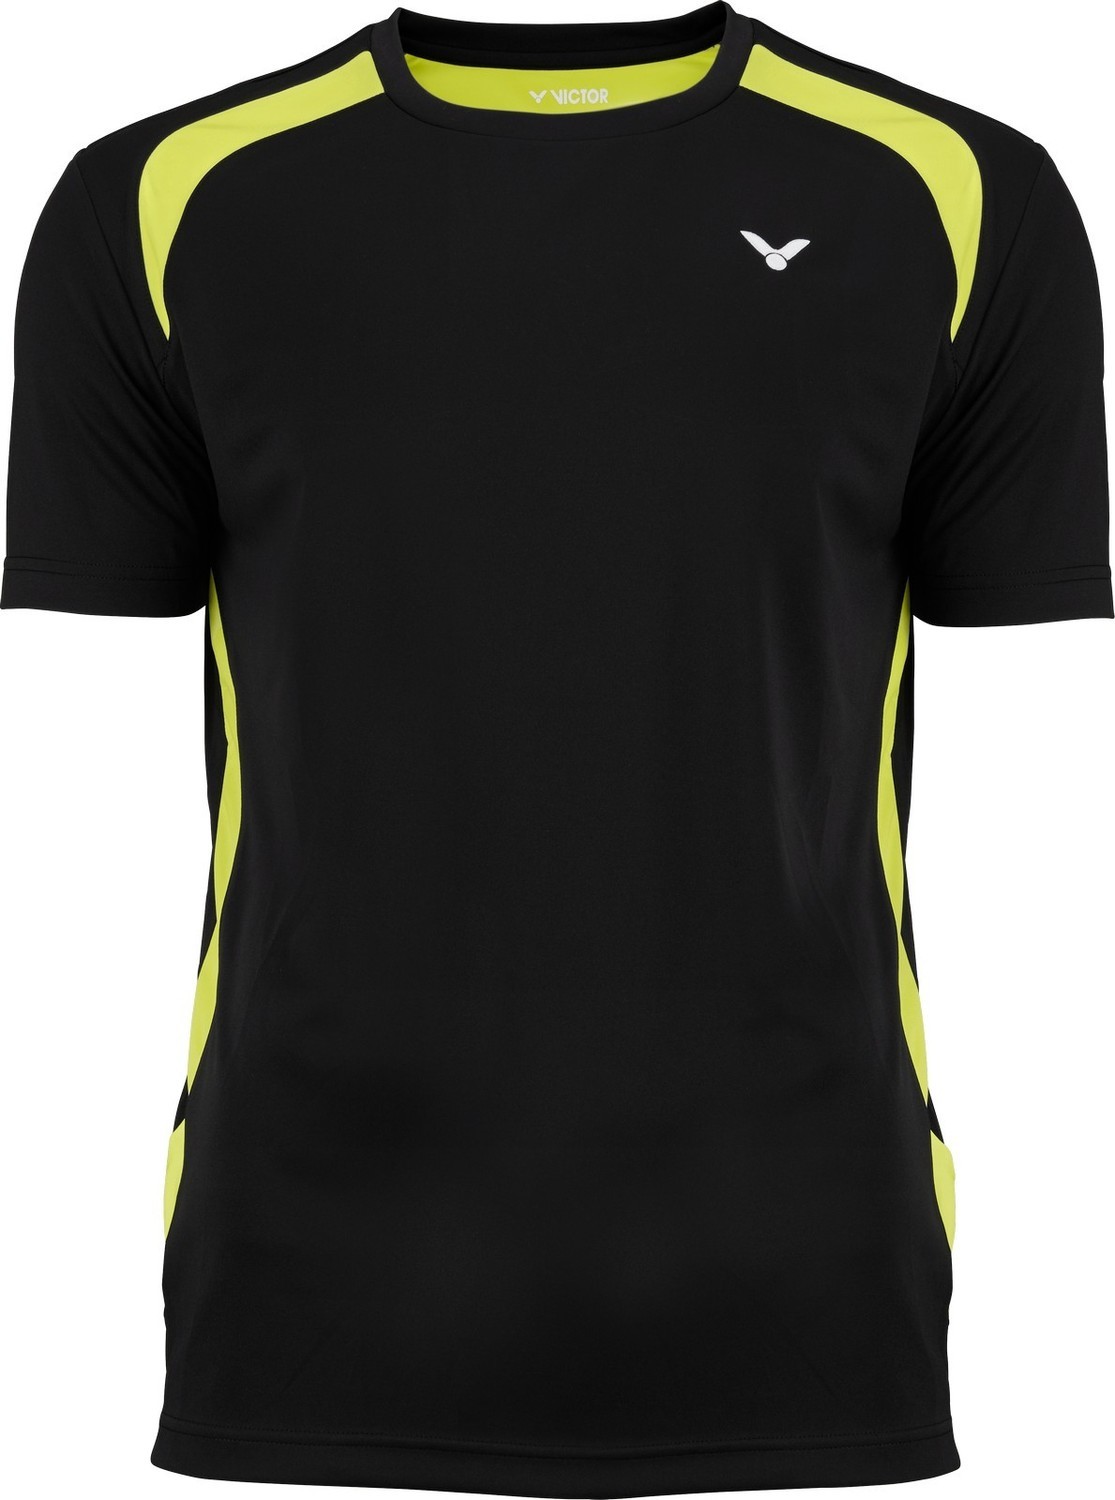 Victor Function T-Shirt Unisex 6949 - Black, Size: XL